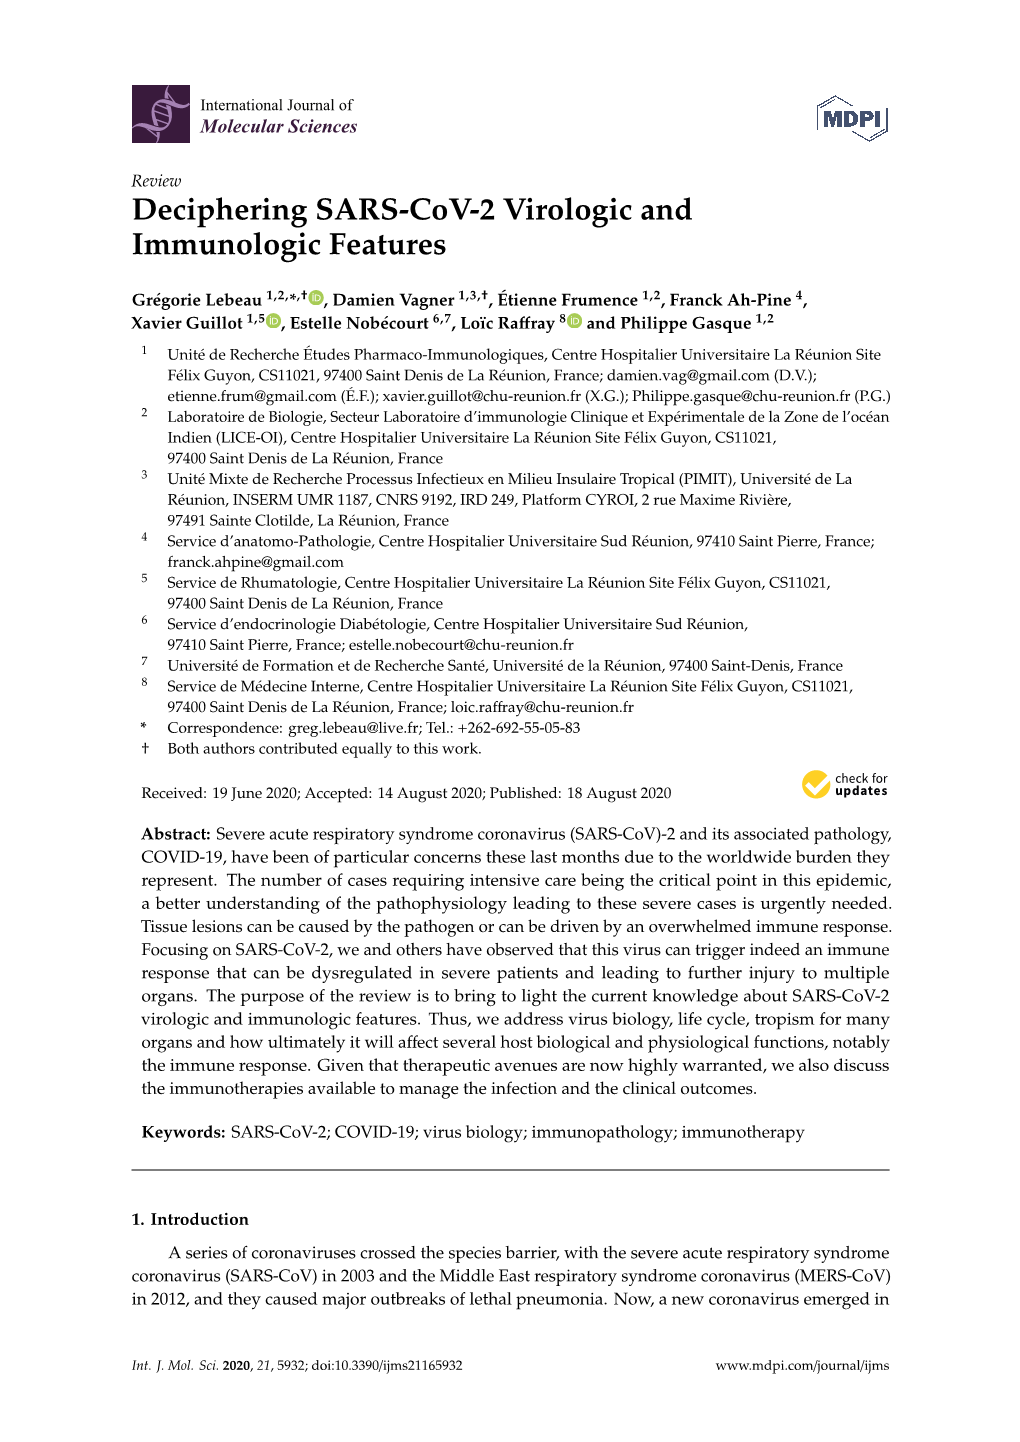 Deciphering SARS-Cov-2 Virologic and Immunologic Features